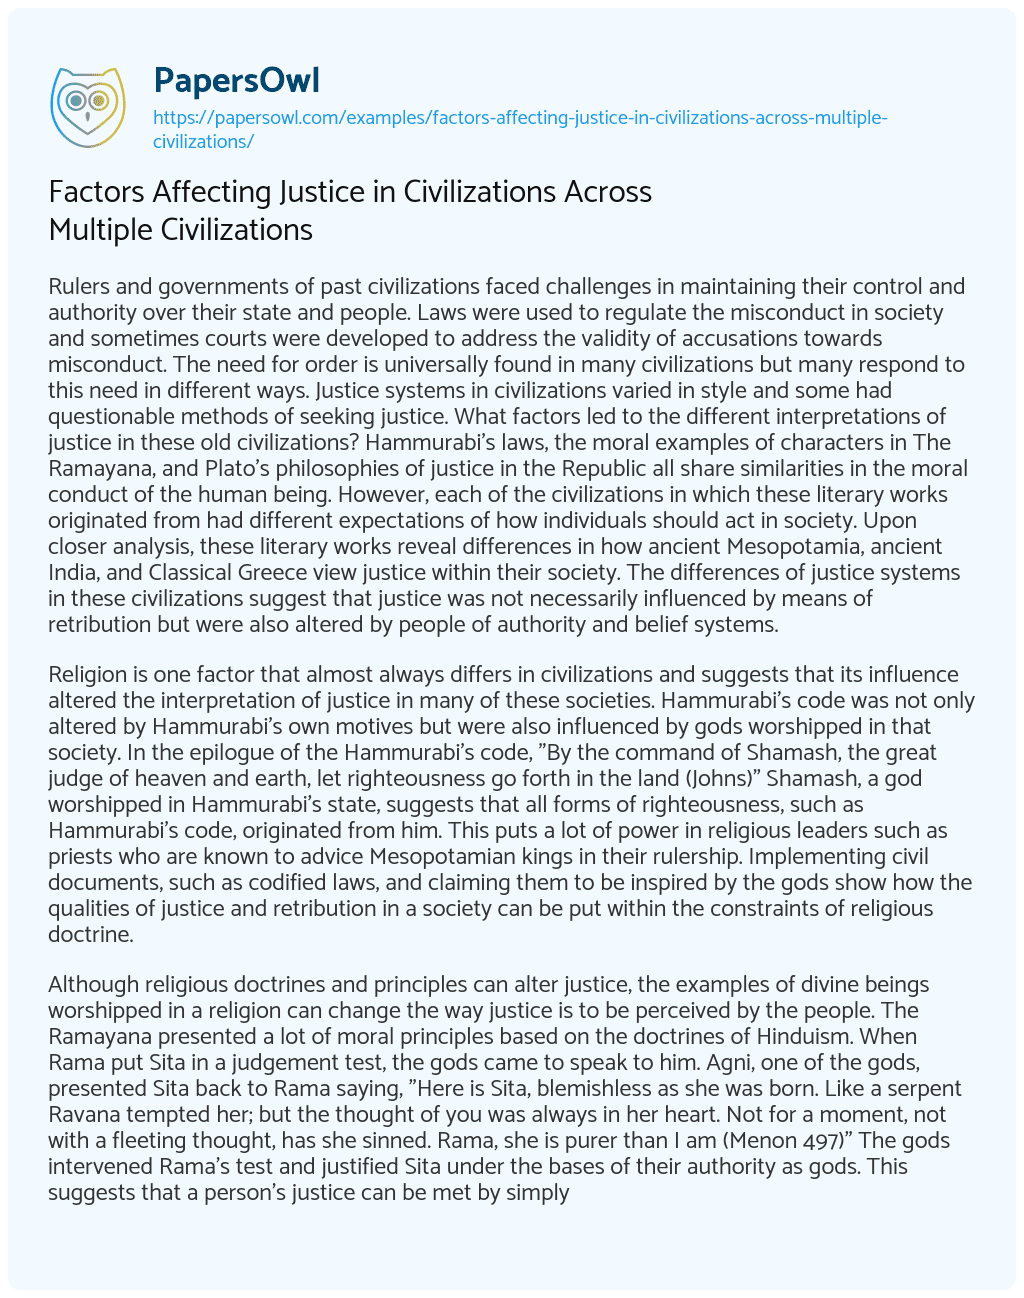 Essay on Factors Affecting Justice in Civilizations Across Multiple Civilizations